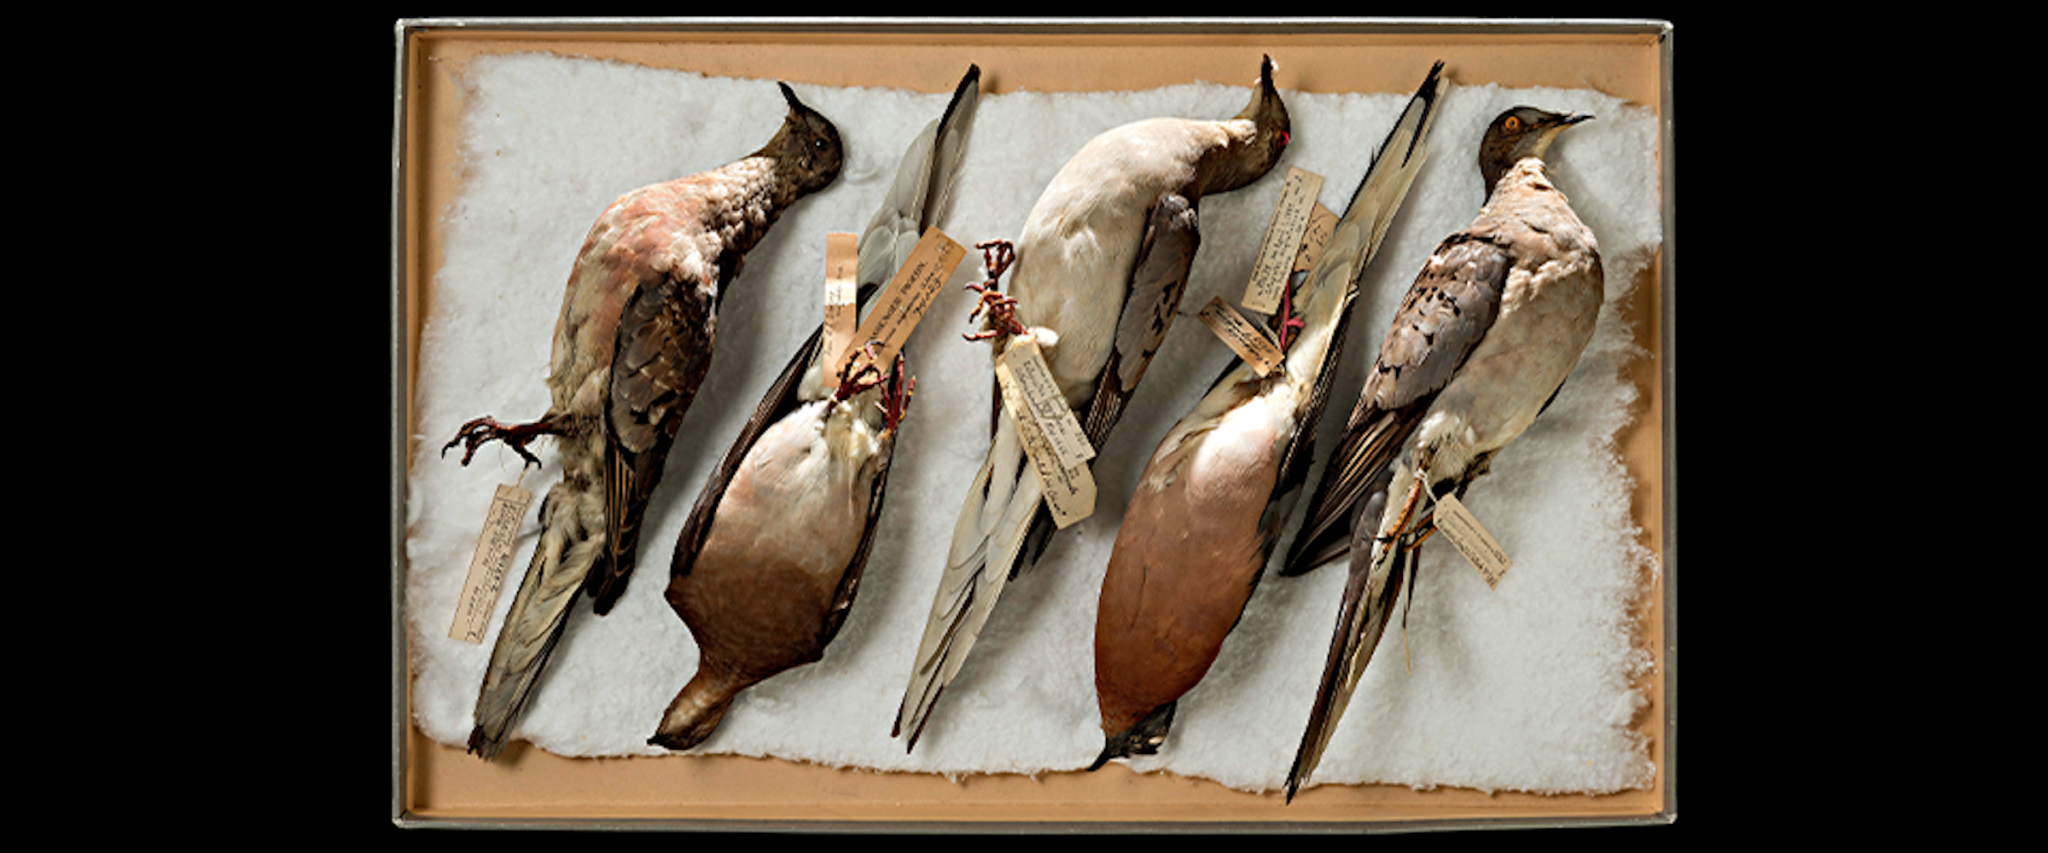 Several passenger bird specimens lie on a tray